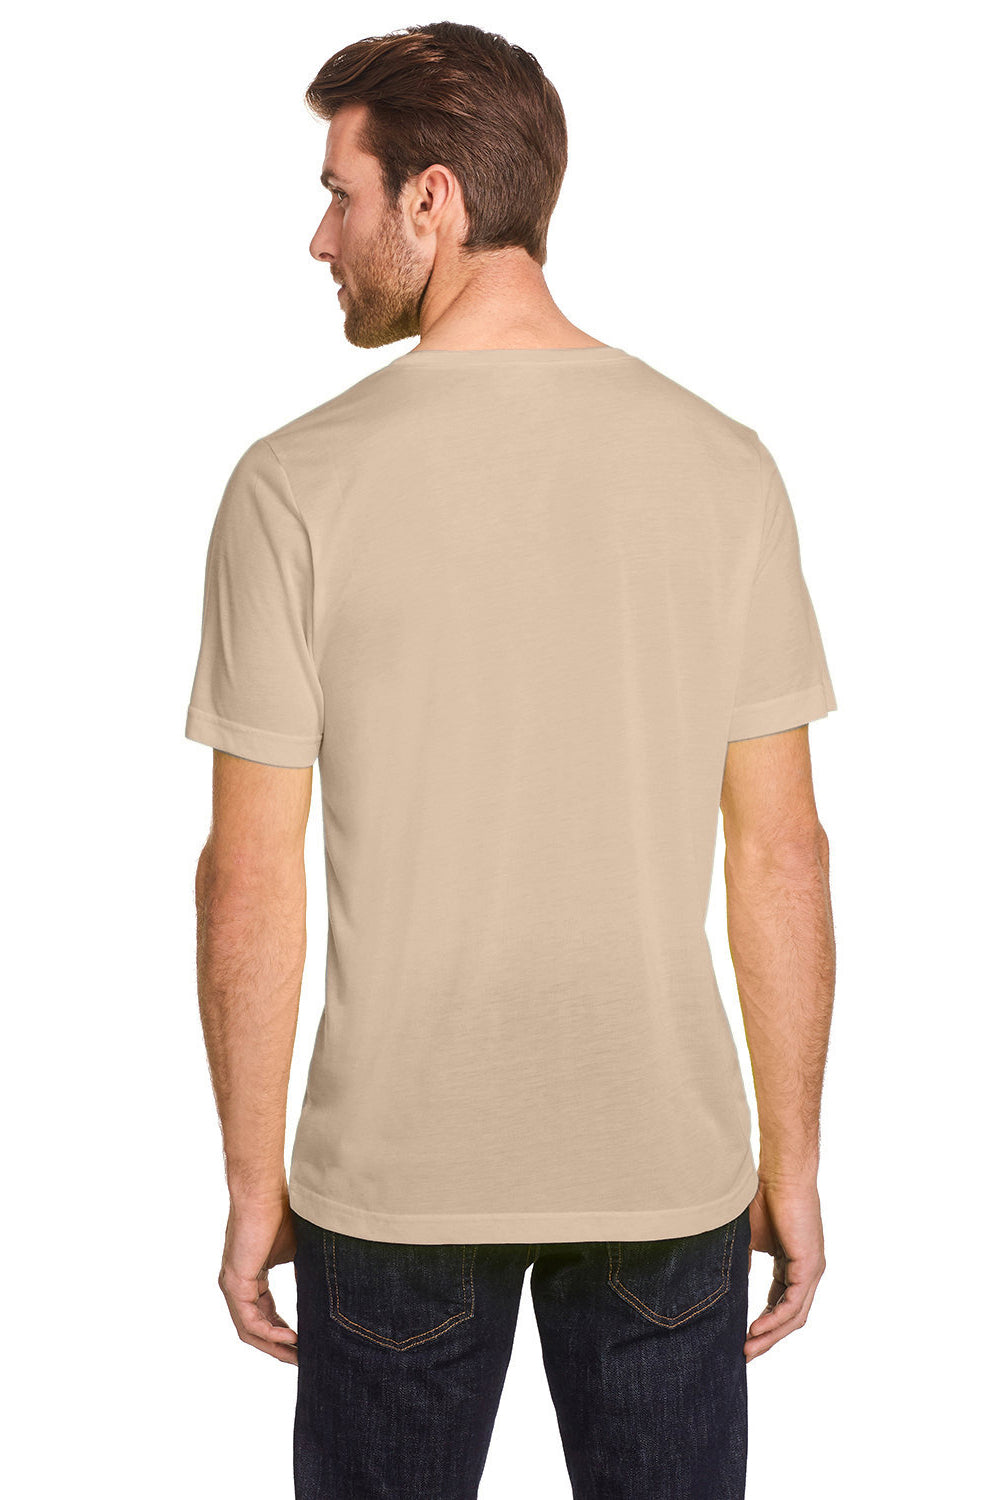 Core 365 CE111 Mens Fusion ChromaSoft Performance Moisture Wicking Short Sleeve Crewneck T-Shirt Stone Back